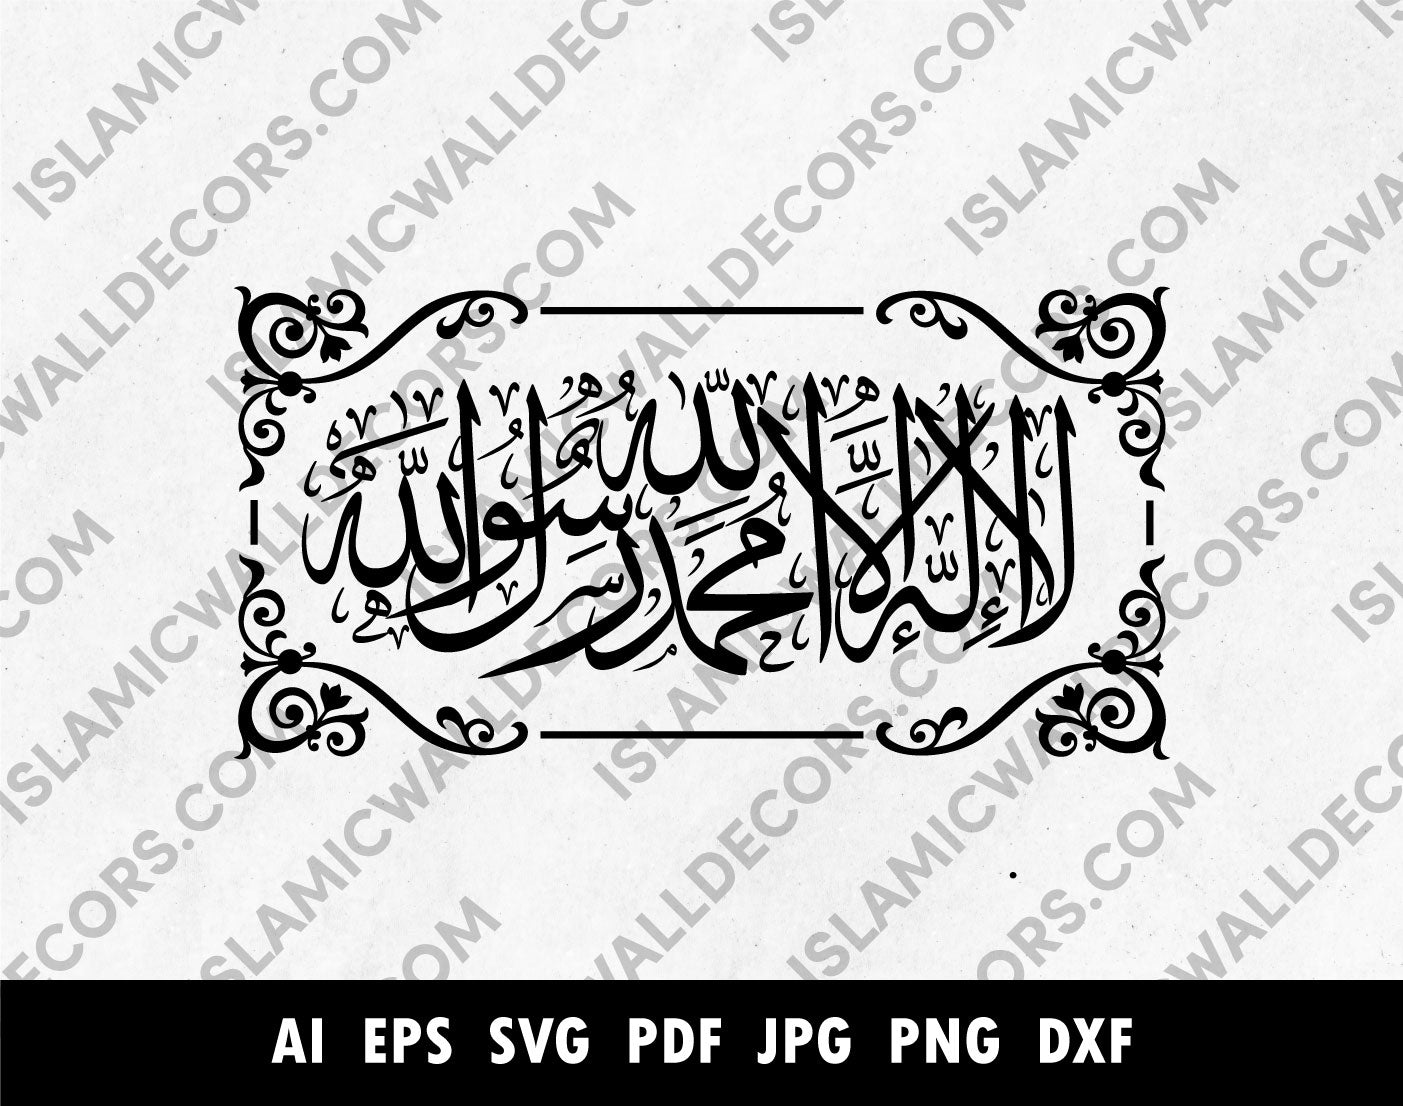 لا اله الا الله محمد رسول الله Arabic Calligraphy for Kalma Tayyaba - La ila ilaha illallah Muhammadur Rasulullah - Laser Cutting Islamic Wall Art, Crciut SVG PNG PDF